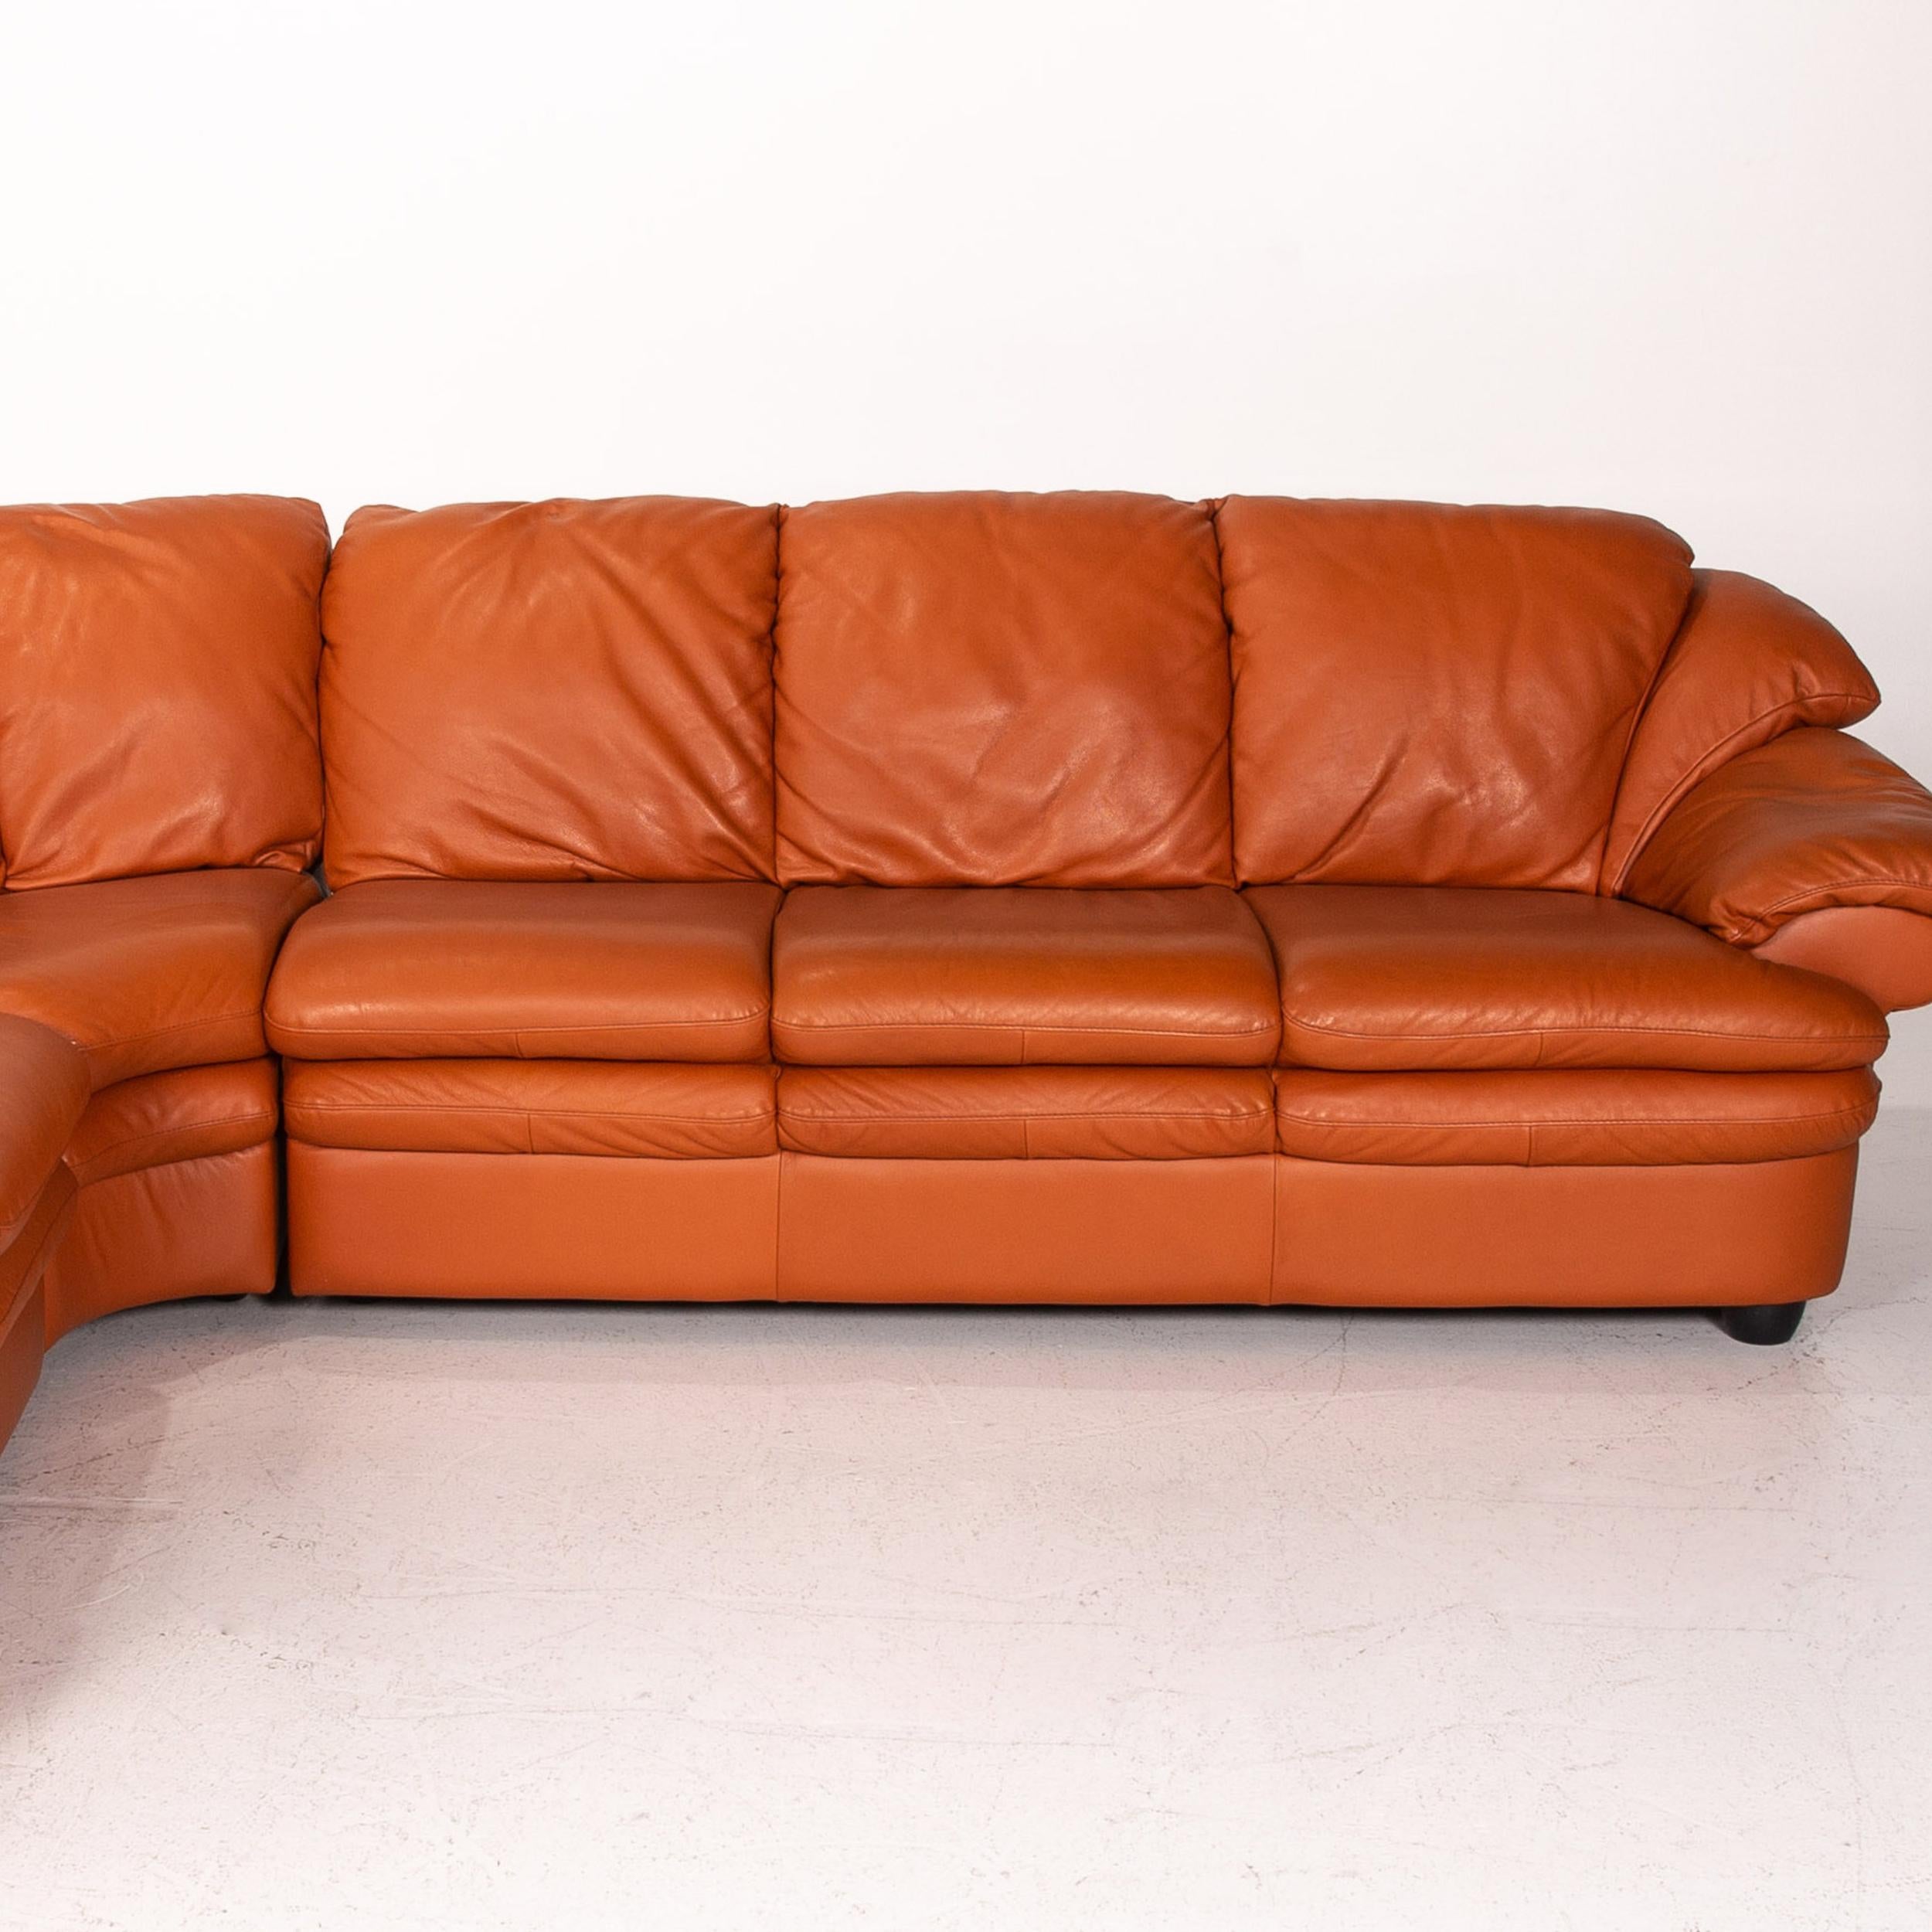 Natuzzi Leather Corner Sofa Terracotta Orange Sofa Couch For Sale 1